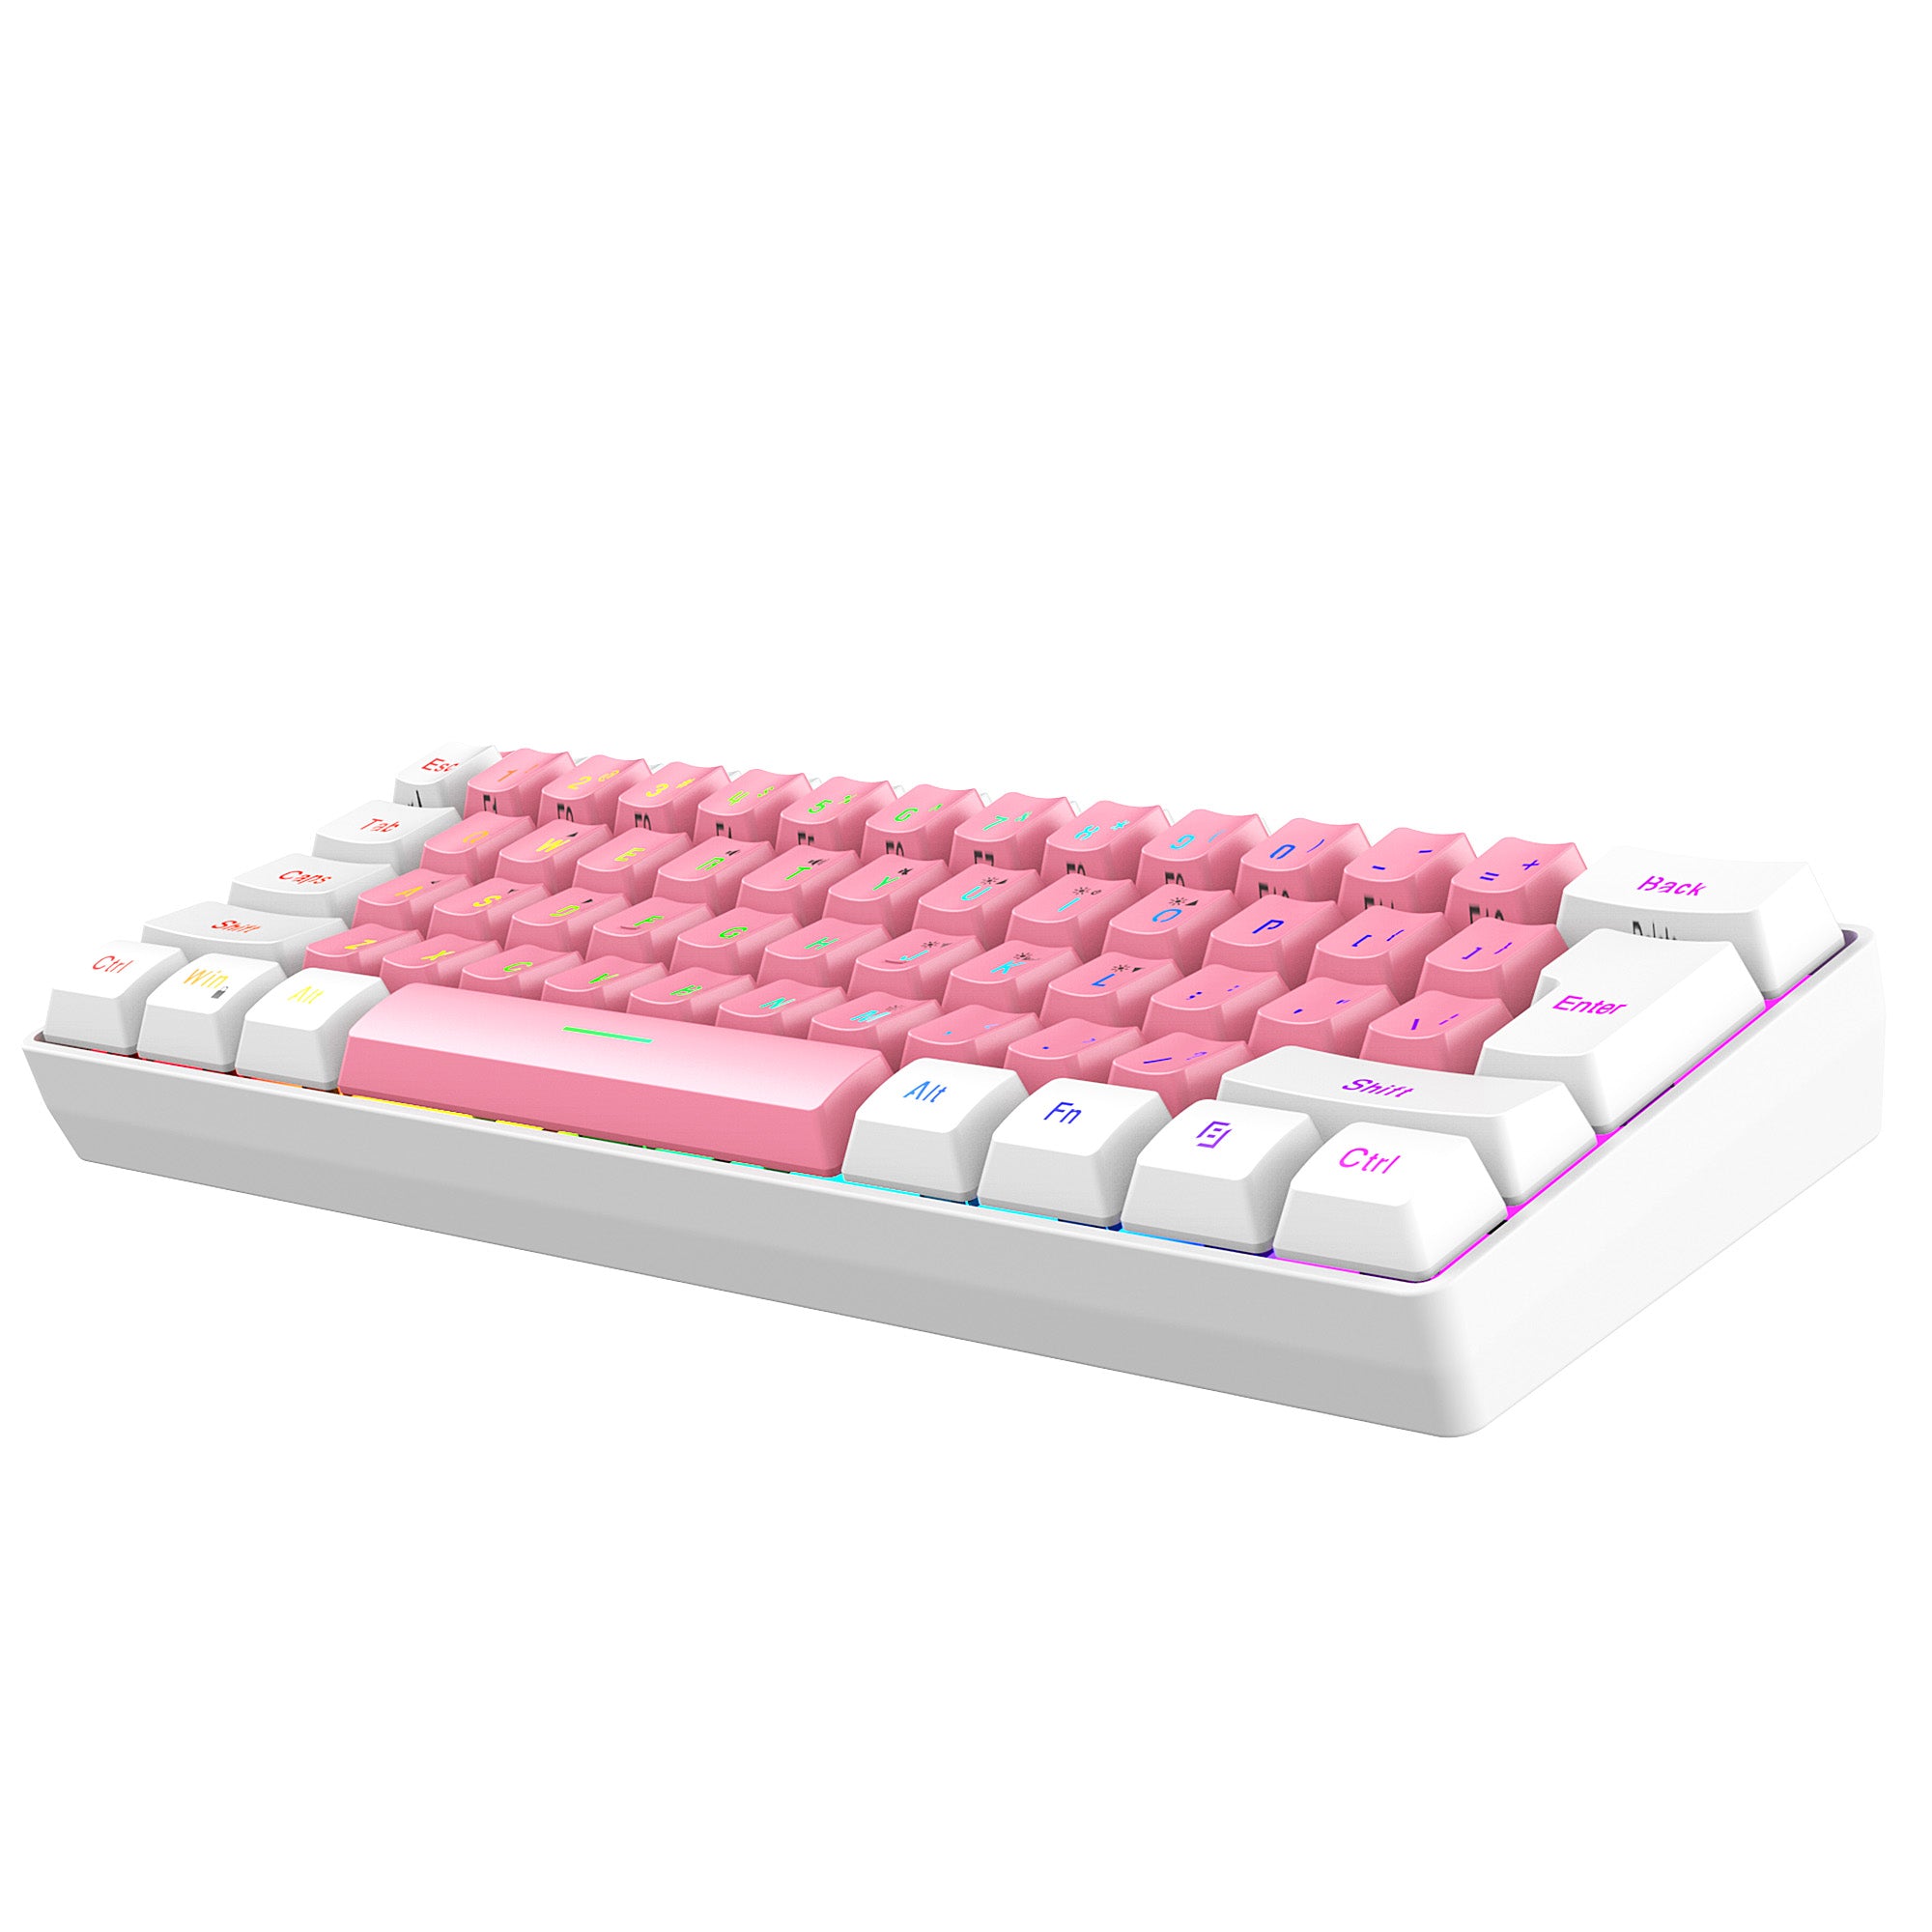 Snpurdiri 60% Membrane Wired Gaming Keyboard, White and Pink